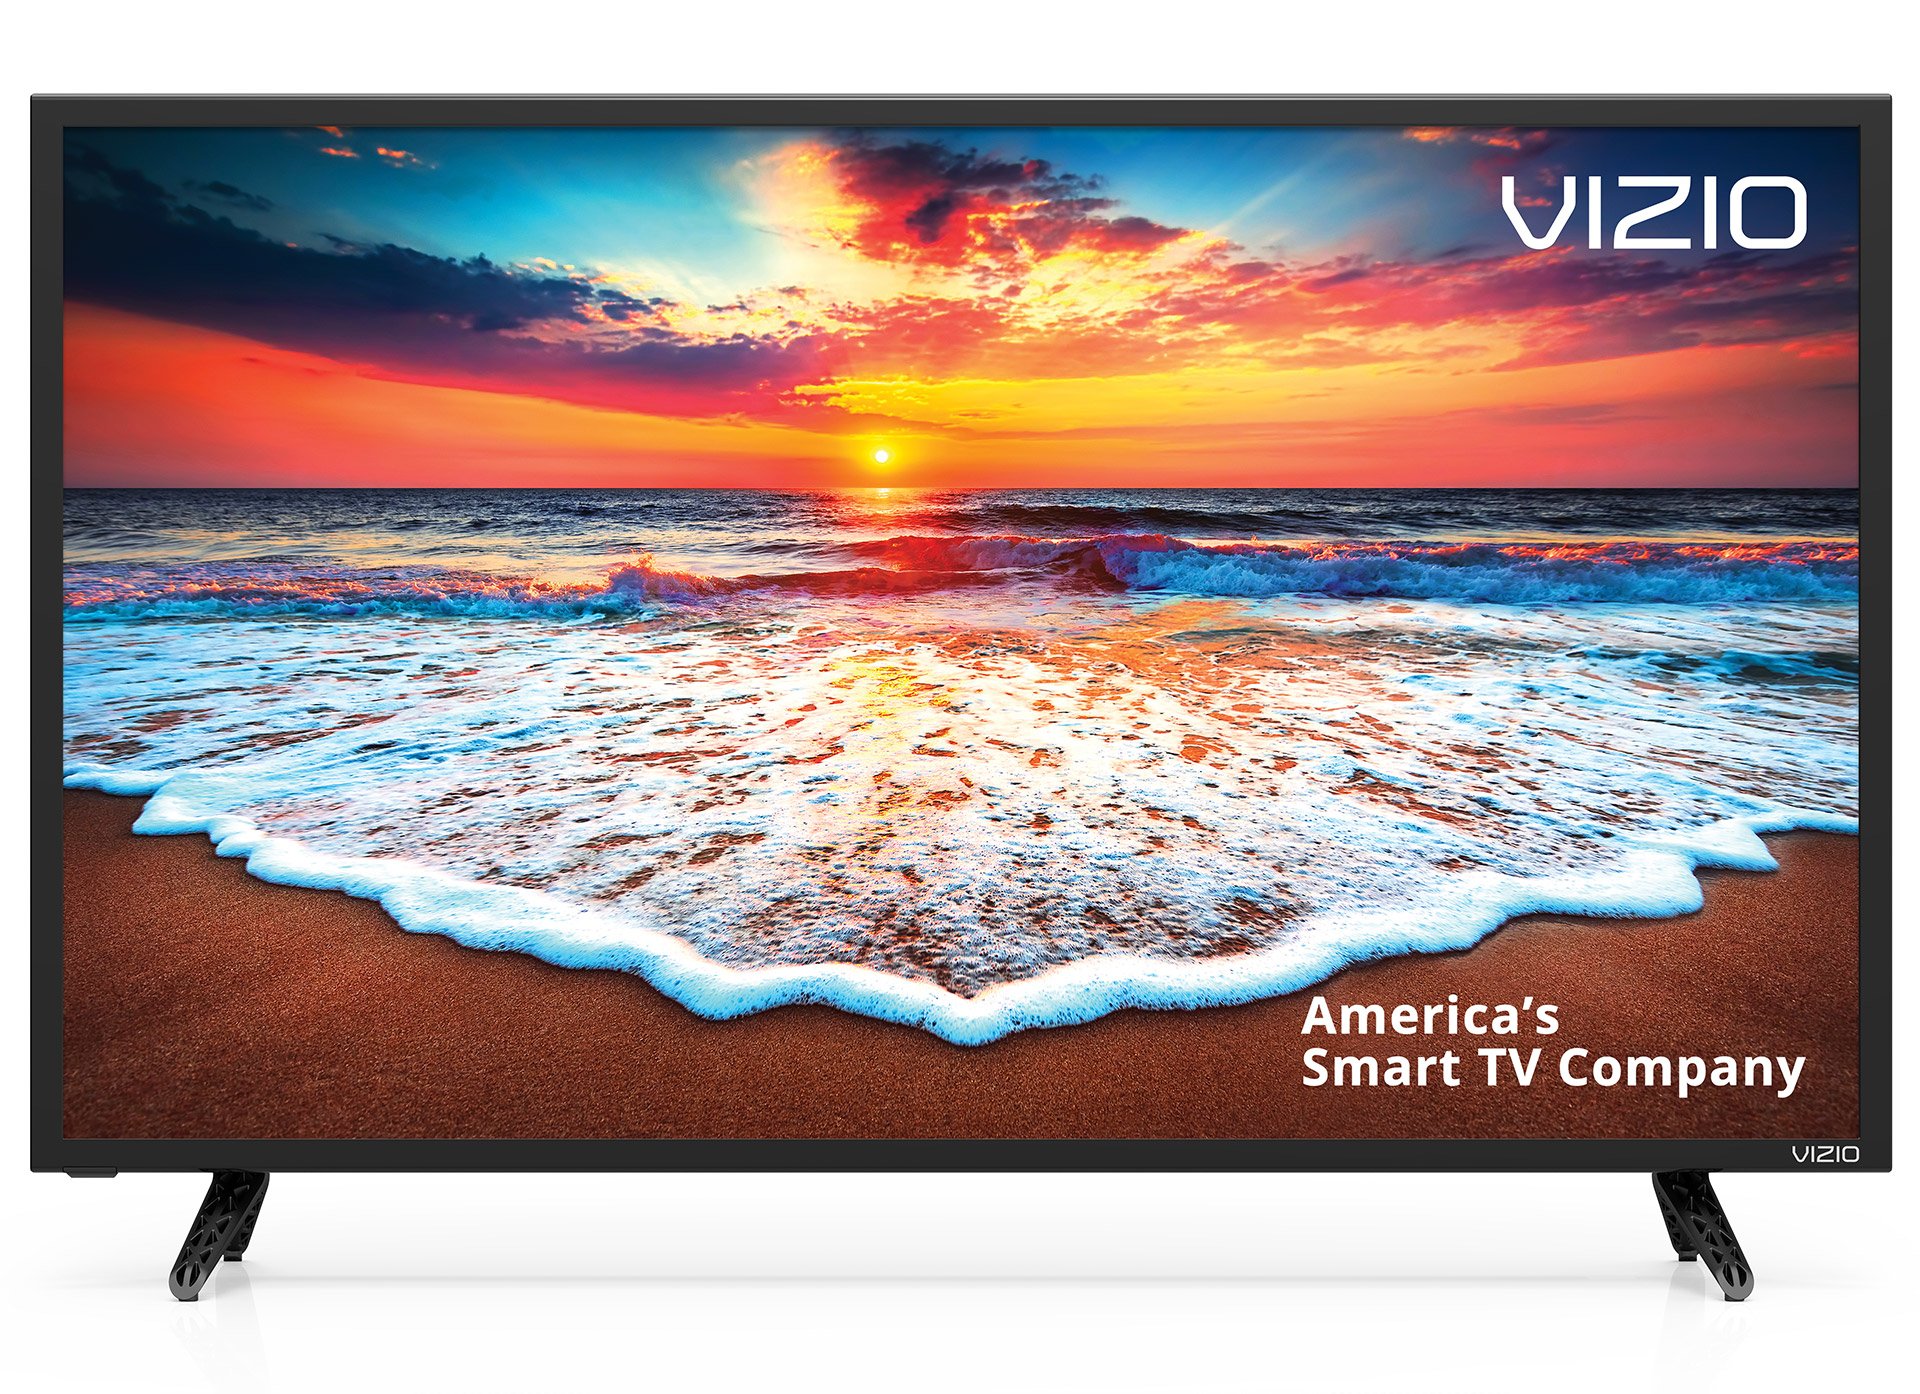 Vizio 32-Inch Full HD LED Smart TV